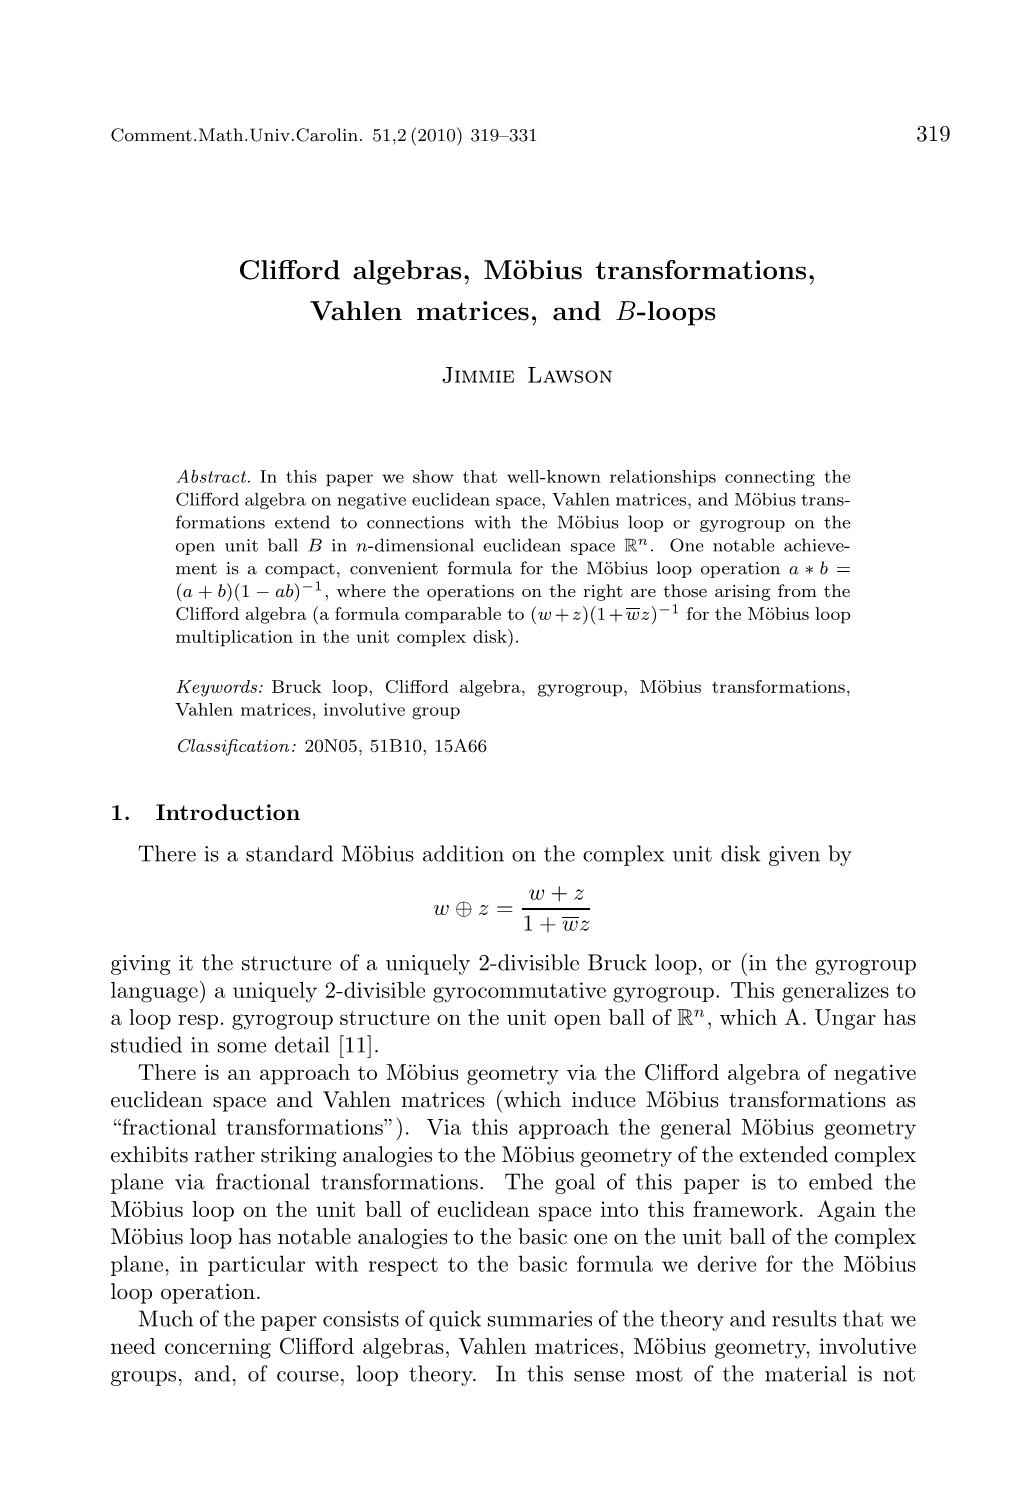 Clifford Algebras, Möbius Transformations, Vahlen Matrices